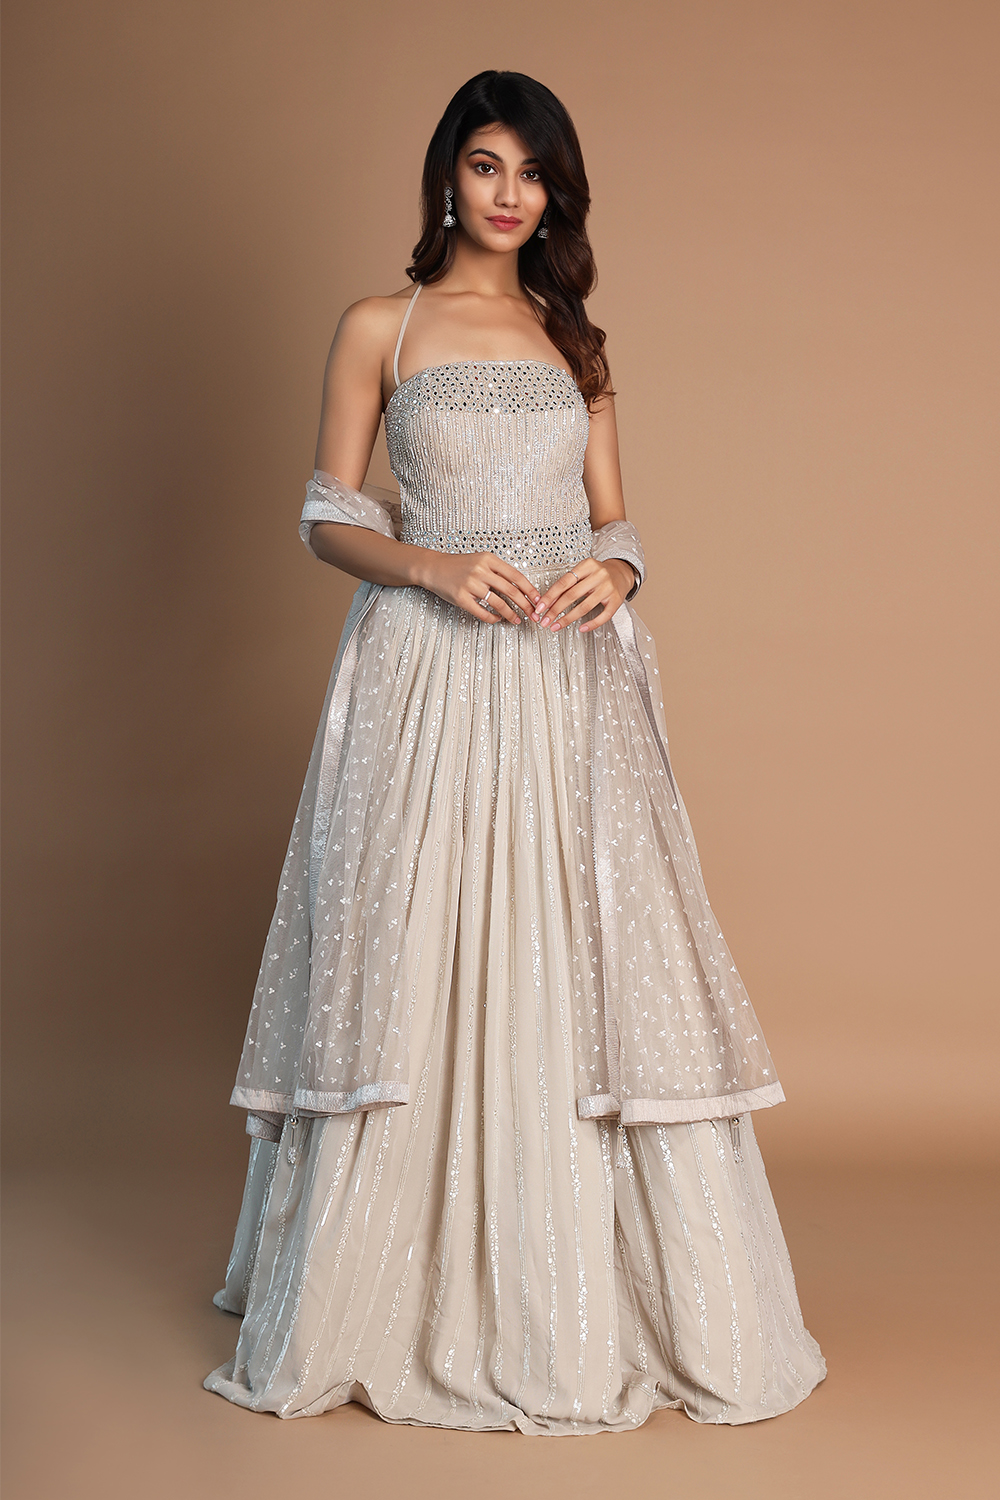 Indian Wedding Anniversary Dresses on Sale, SAVE 59% - b2bnastart.pl